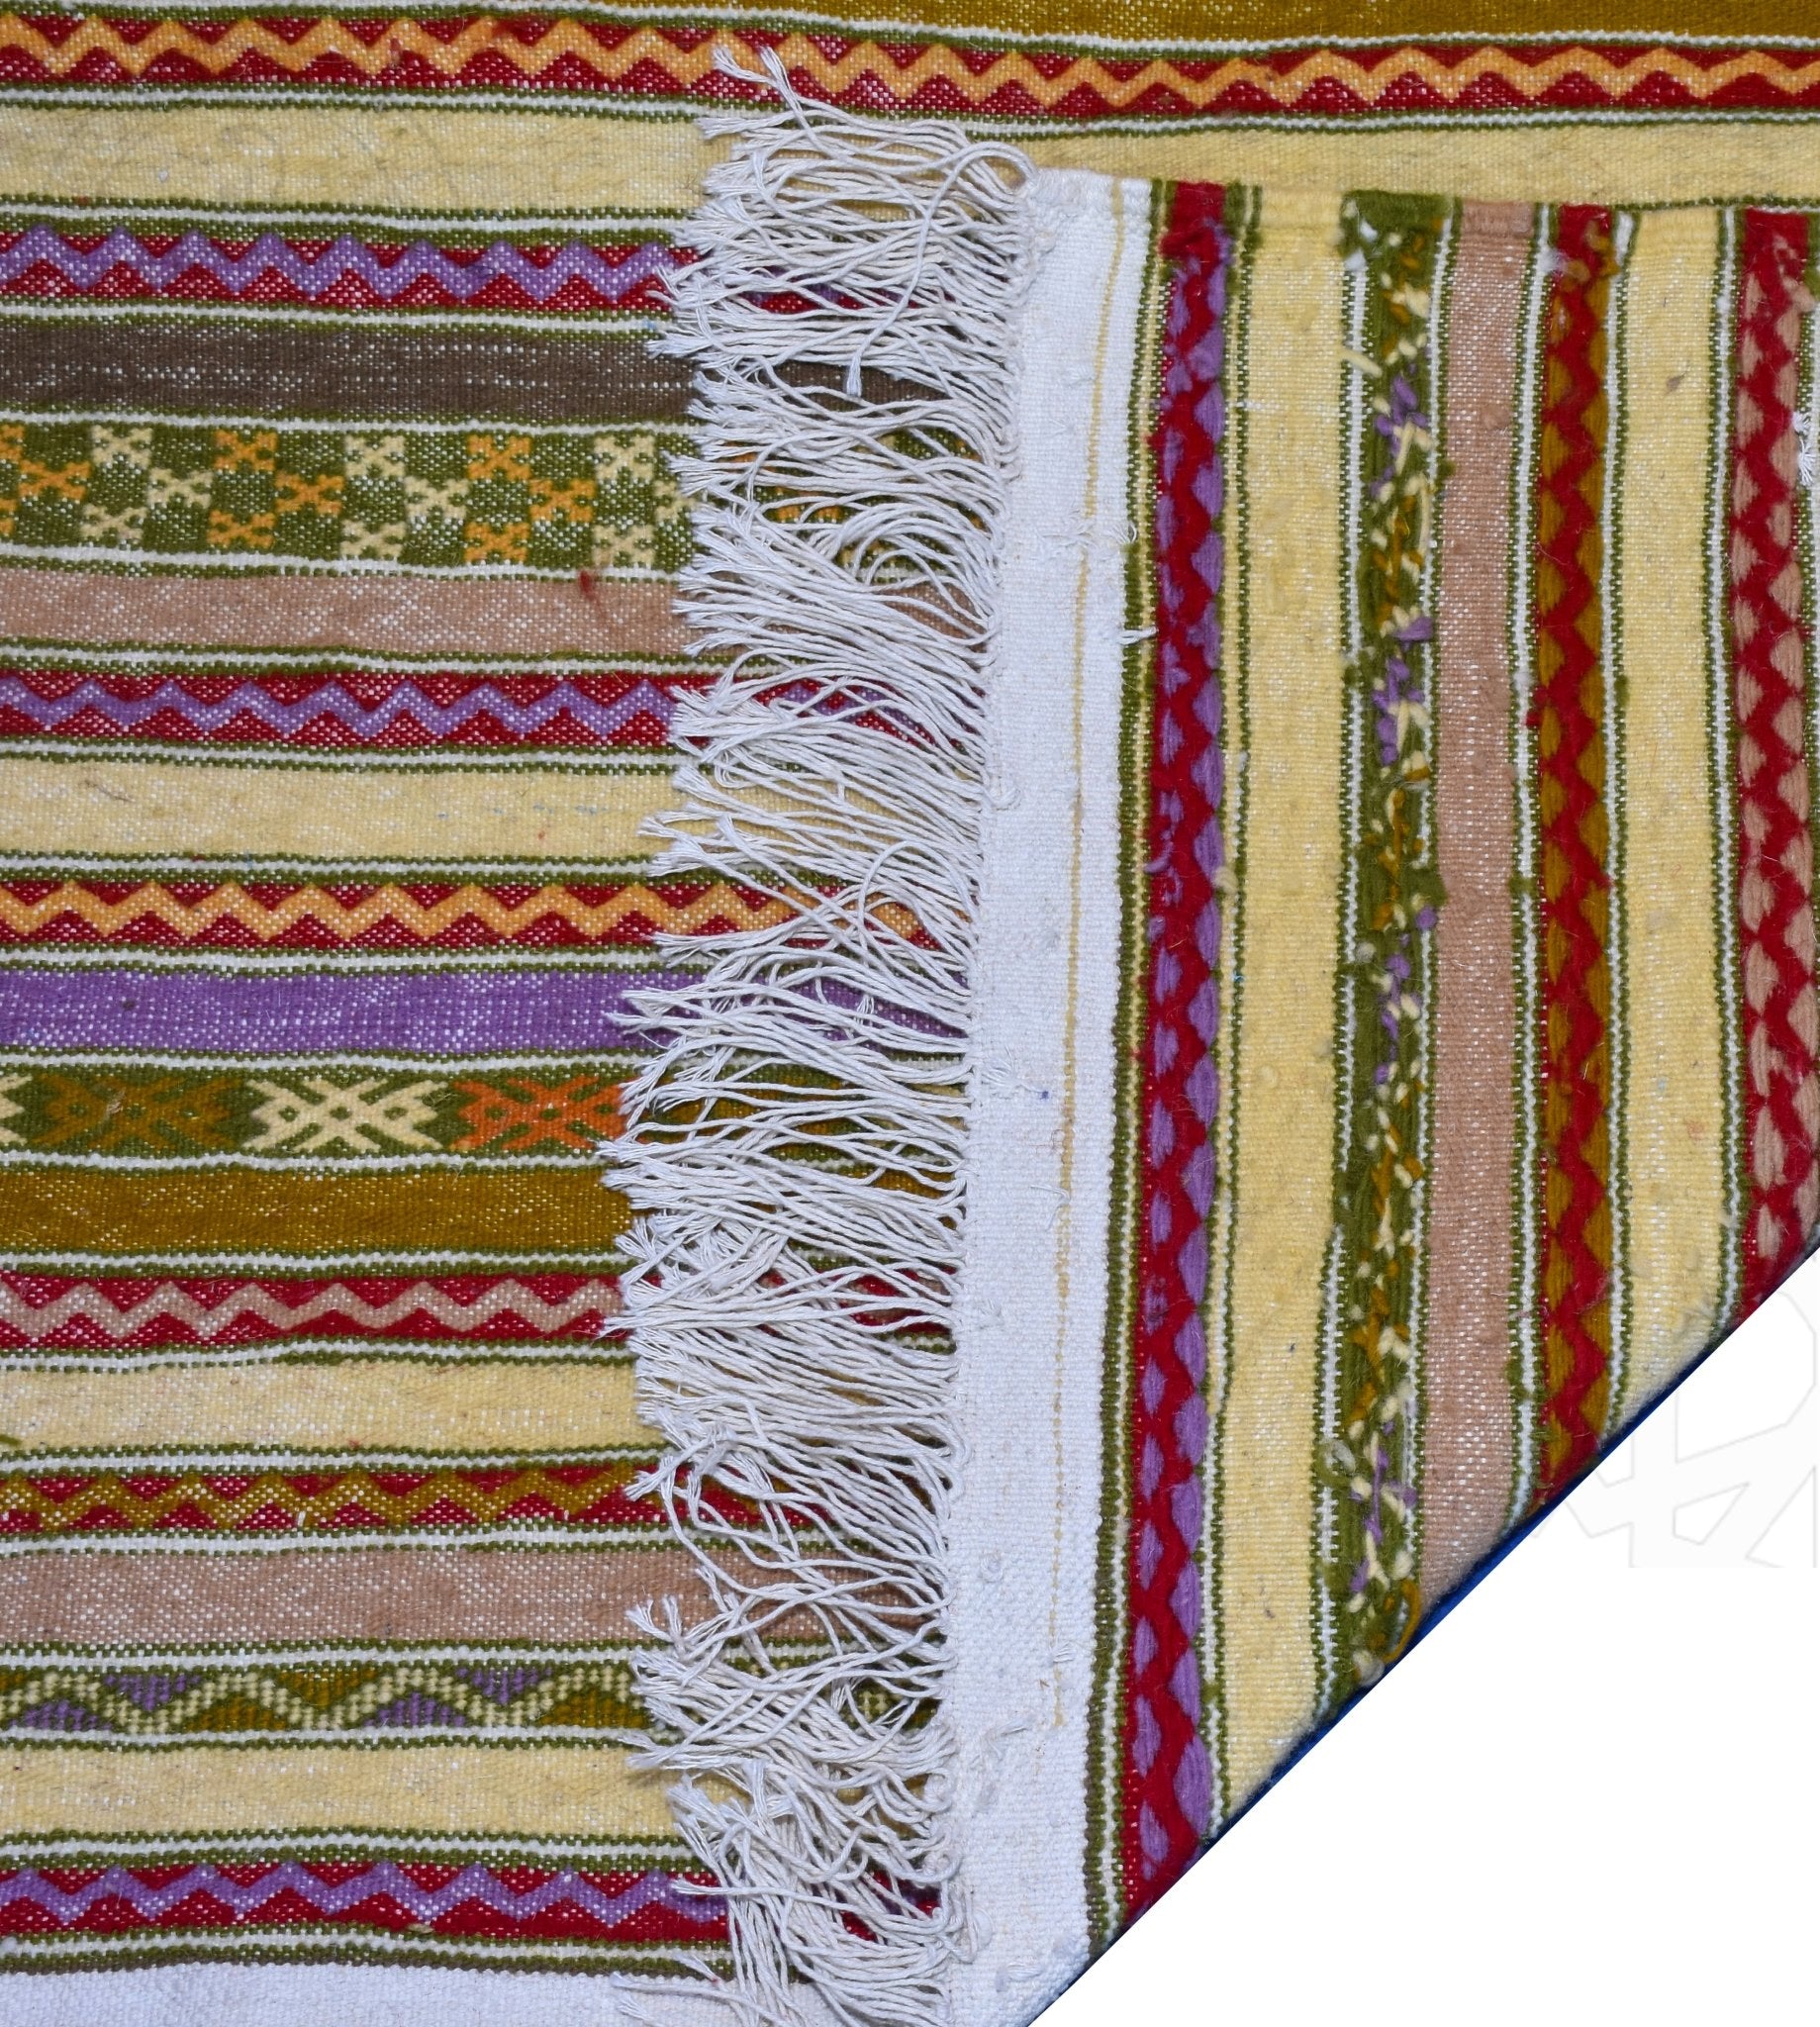 Flatweave kilim hanbal Moroccan rug - 4.27 x 5.91 ft / 130 x 180 cm - Berbers Market